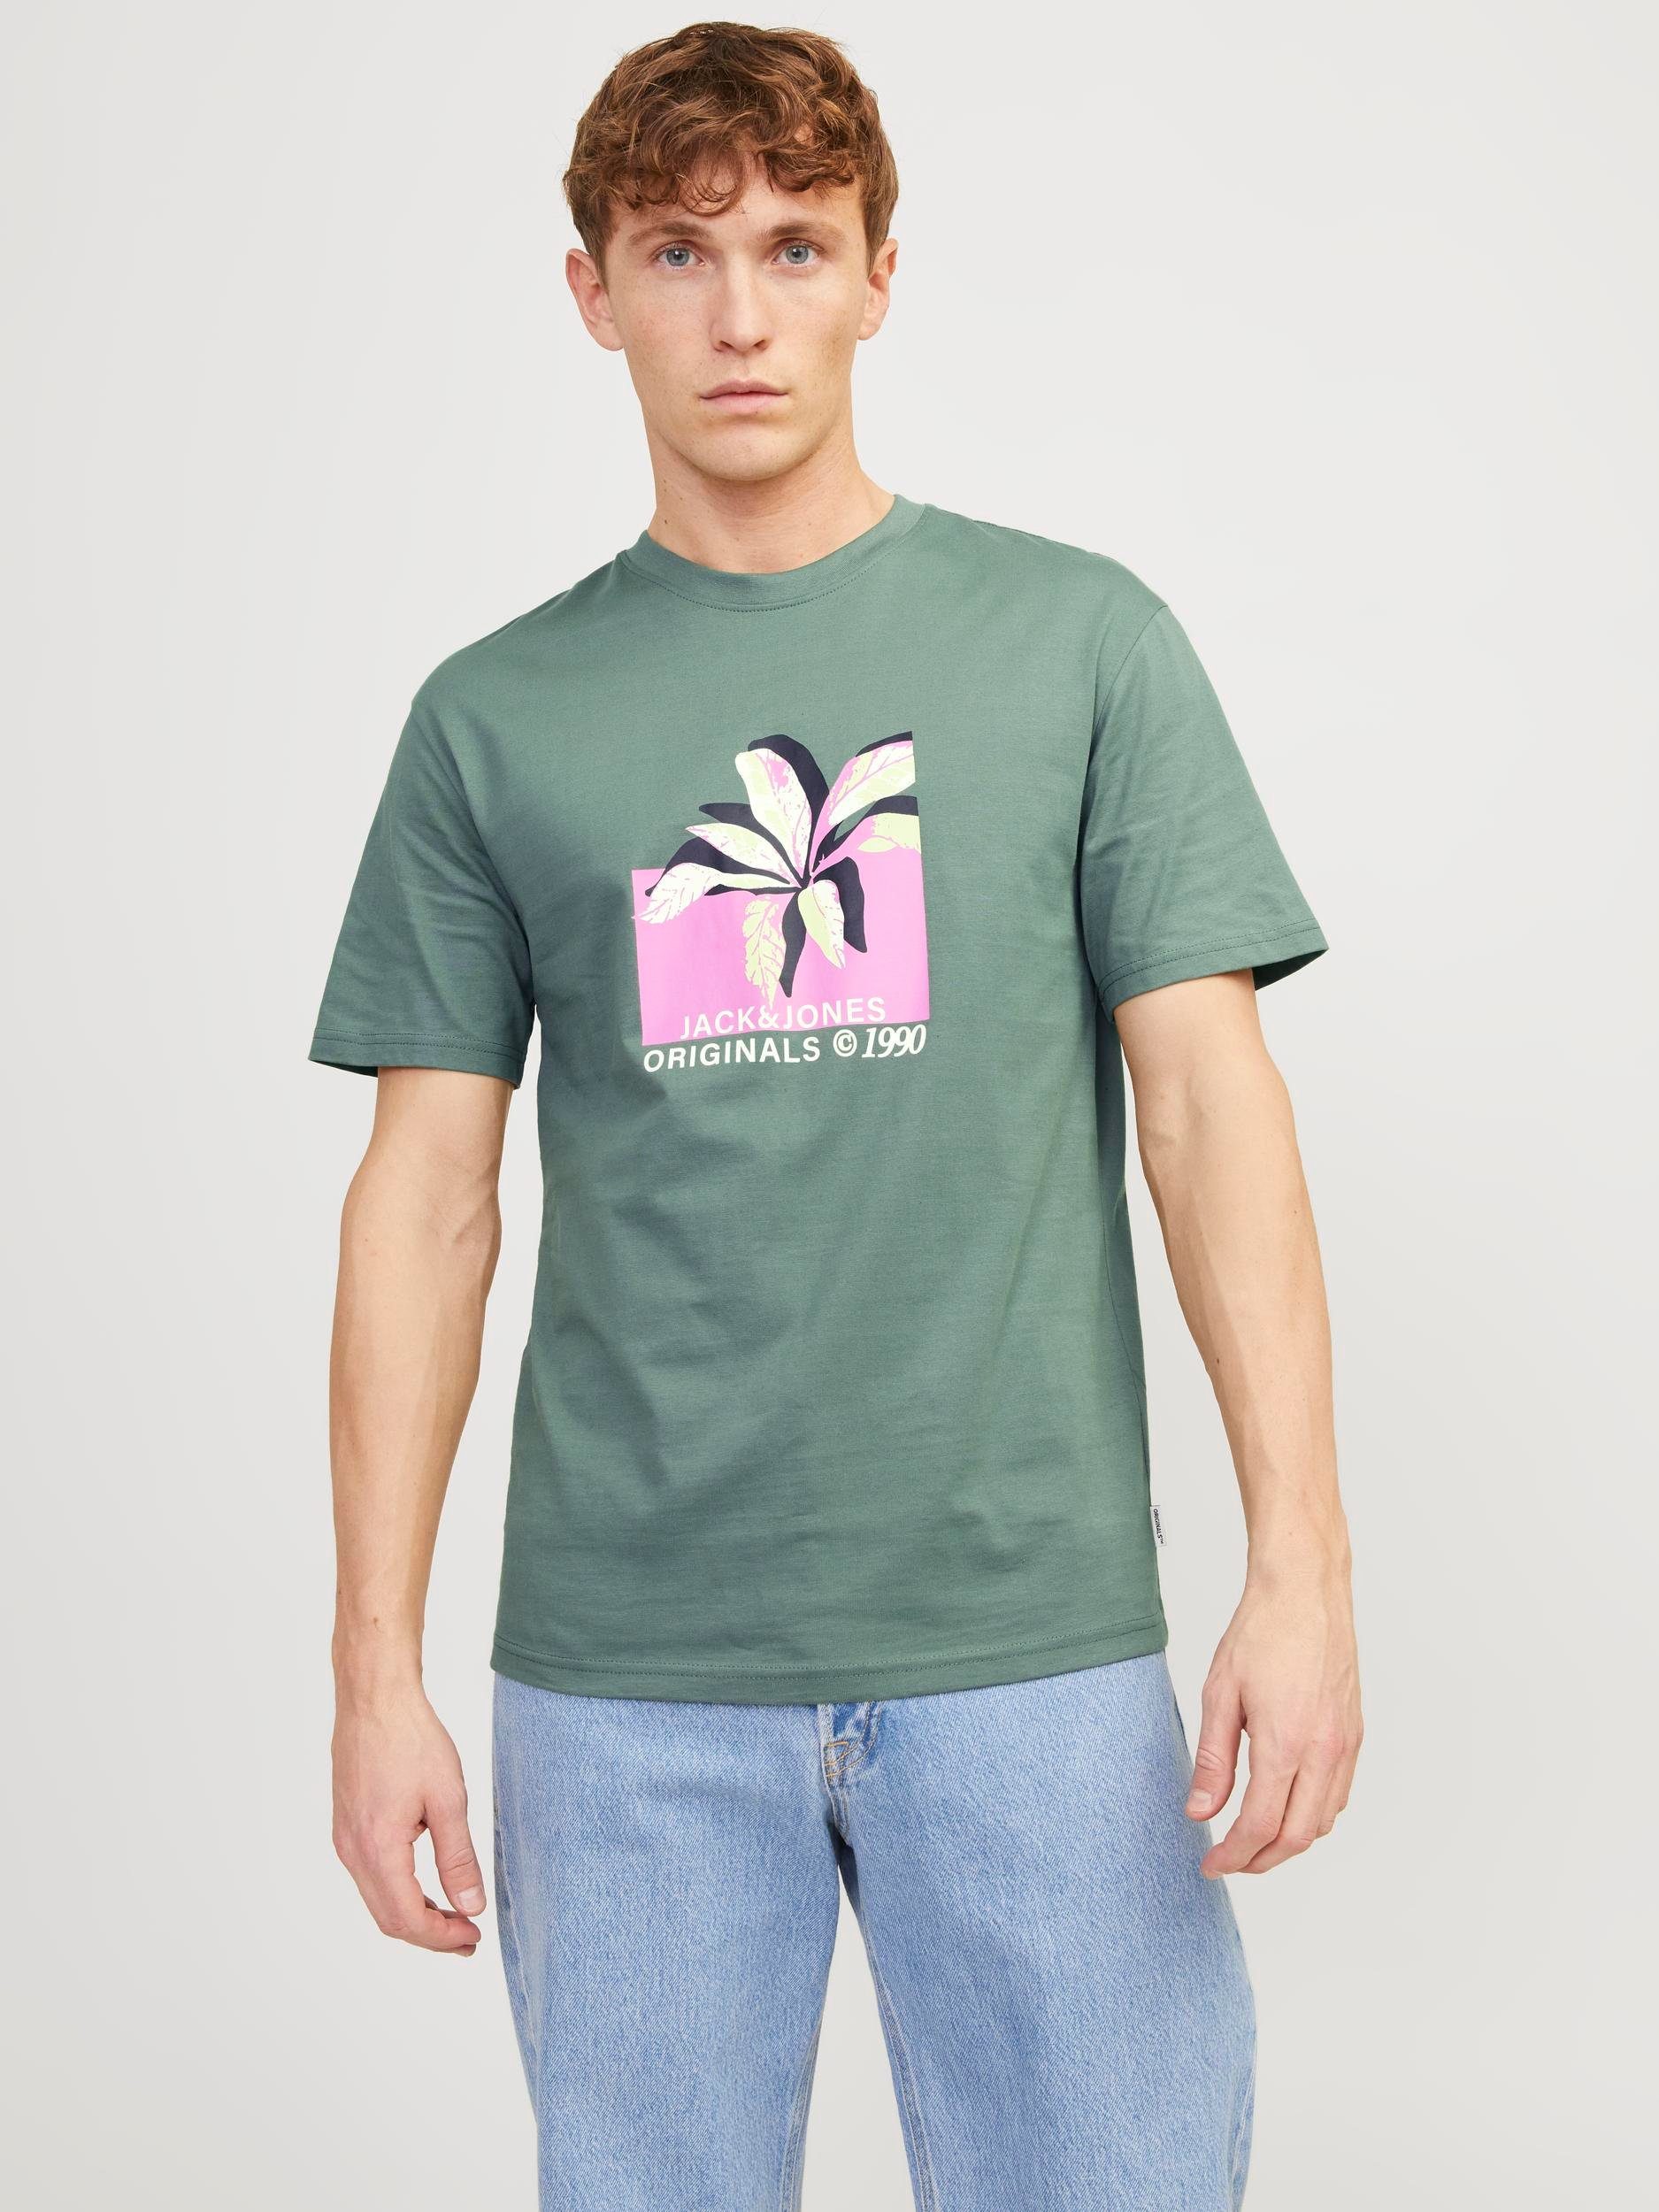 JACK & JONES ORIGINALS T-shirt JORTAMPA met printopdruk laurel wreath